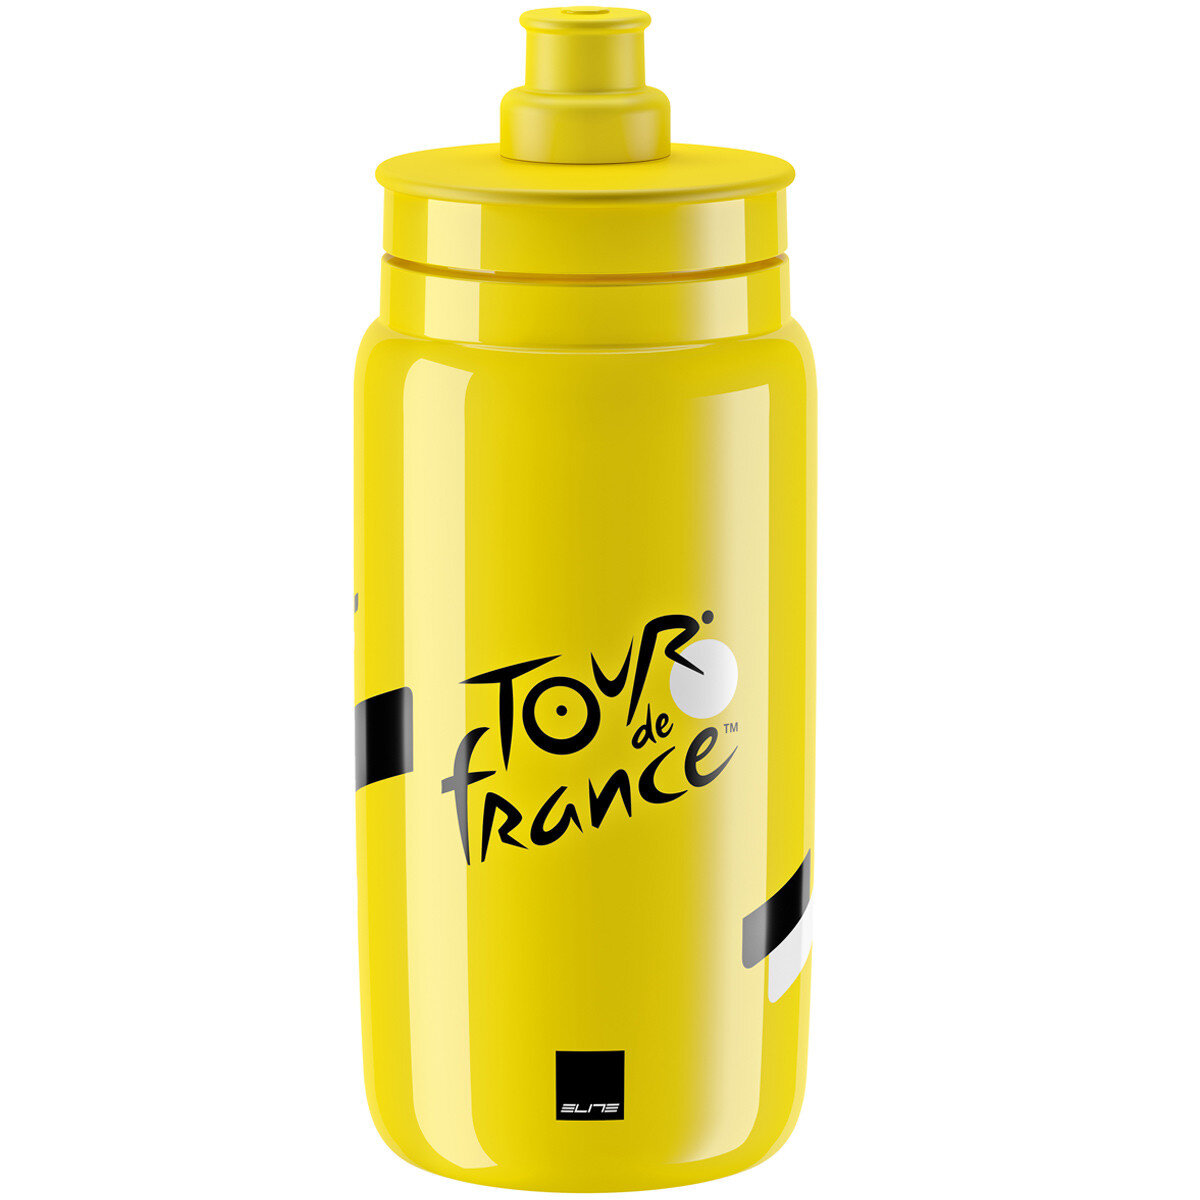 Elite Fly Tour de France Water Bottles – Yellow, 550ml - Cyclop.in